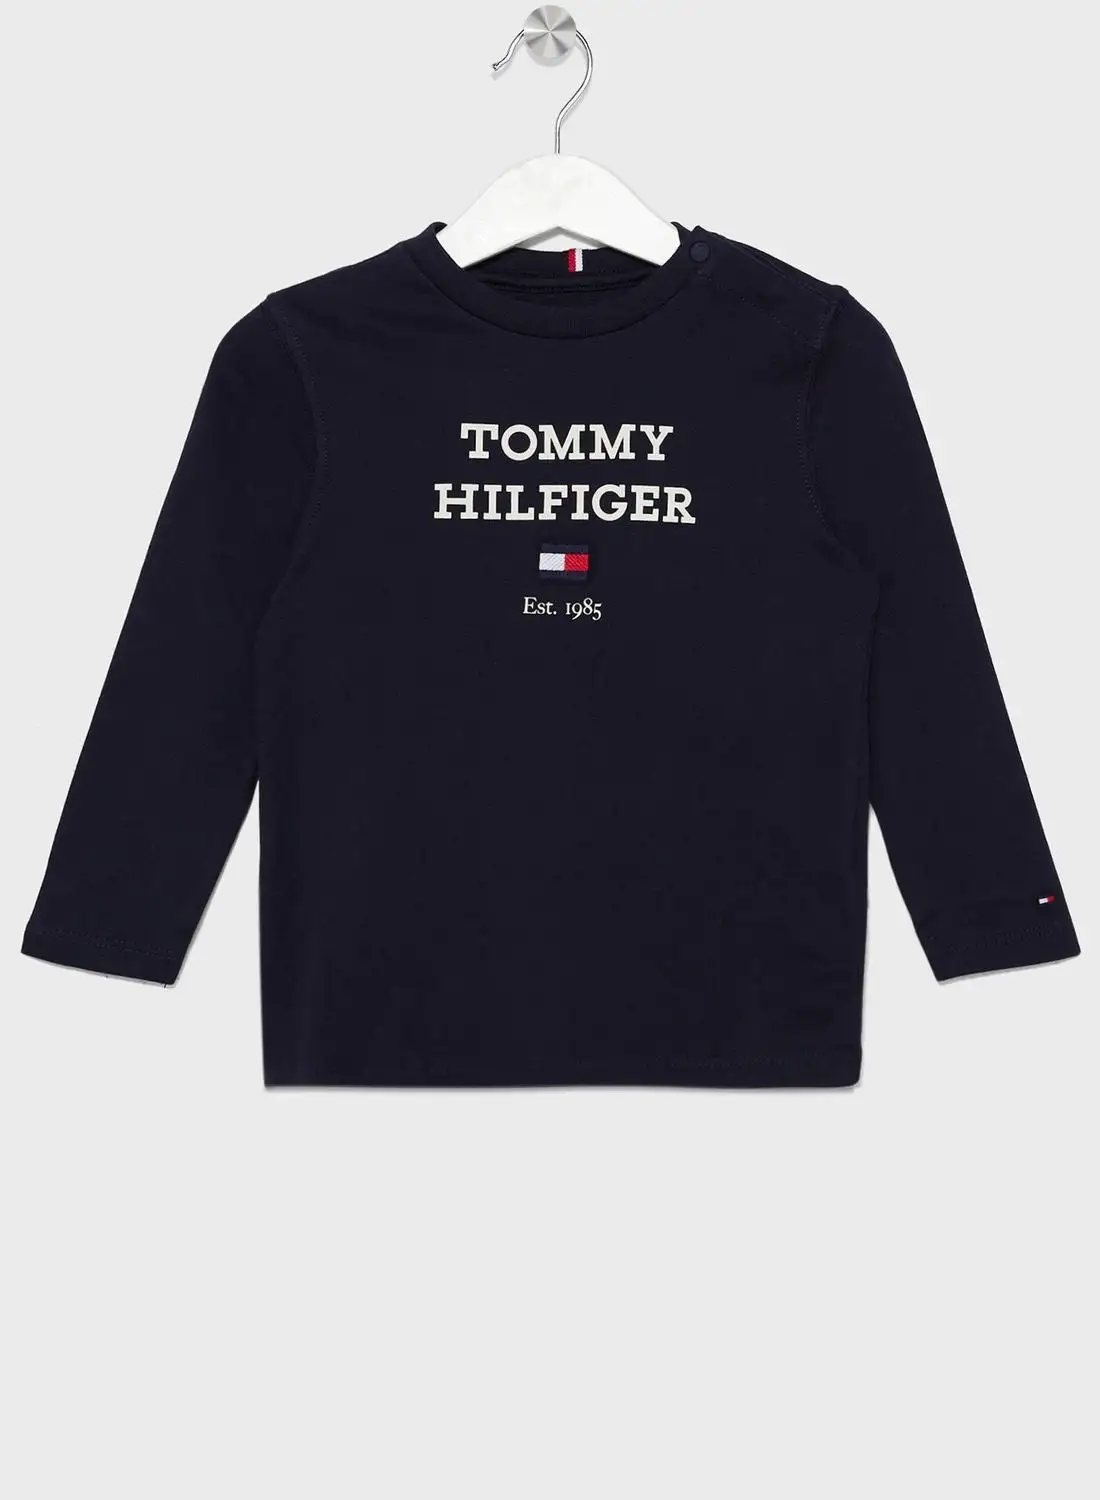 TOMMY HILFIGER Kids Logo T-Shirts